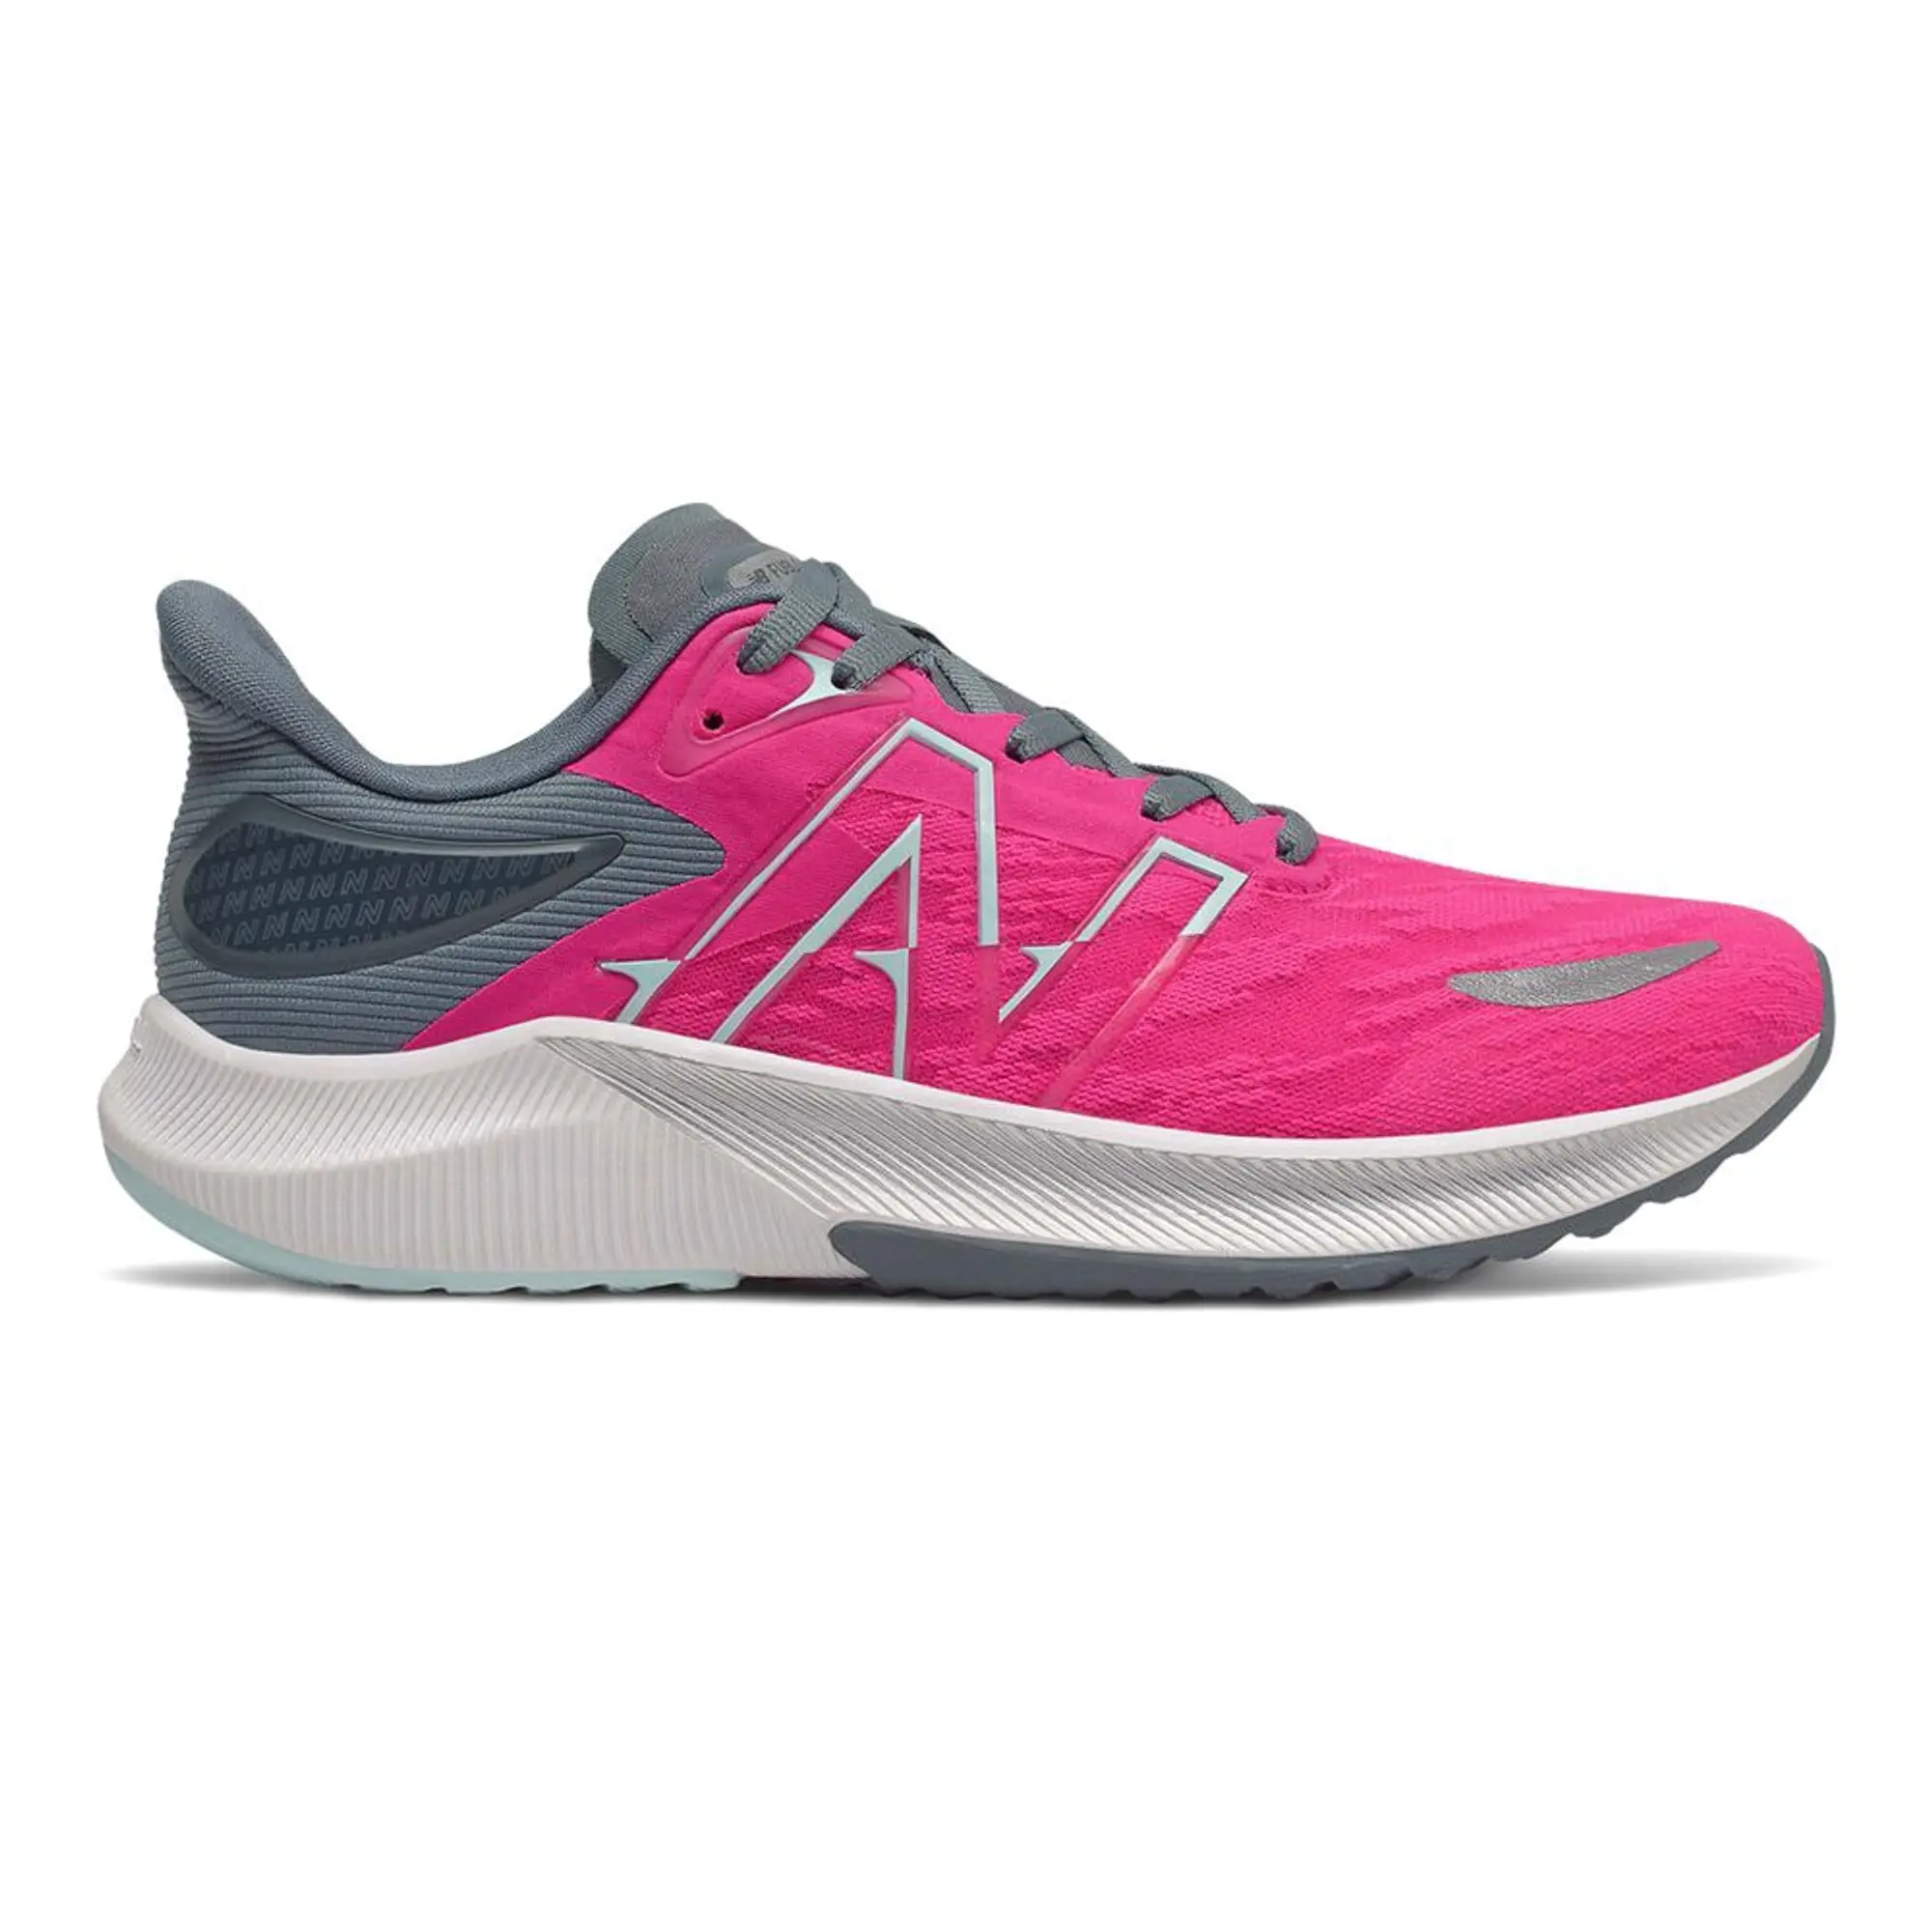 New Balance FuelCell Propel V3 Neutral Running Shoe Women - Pink, Grey